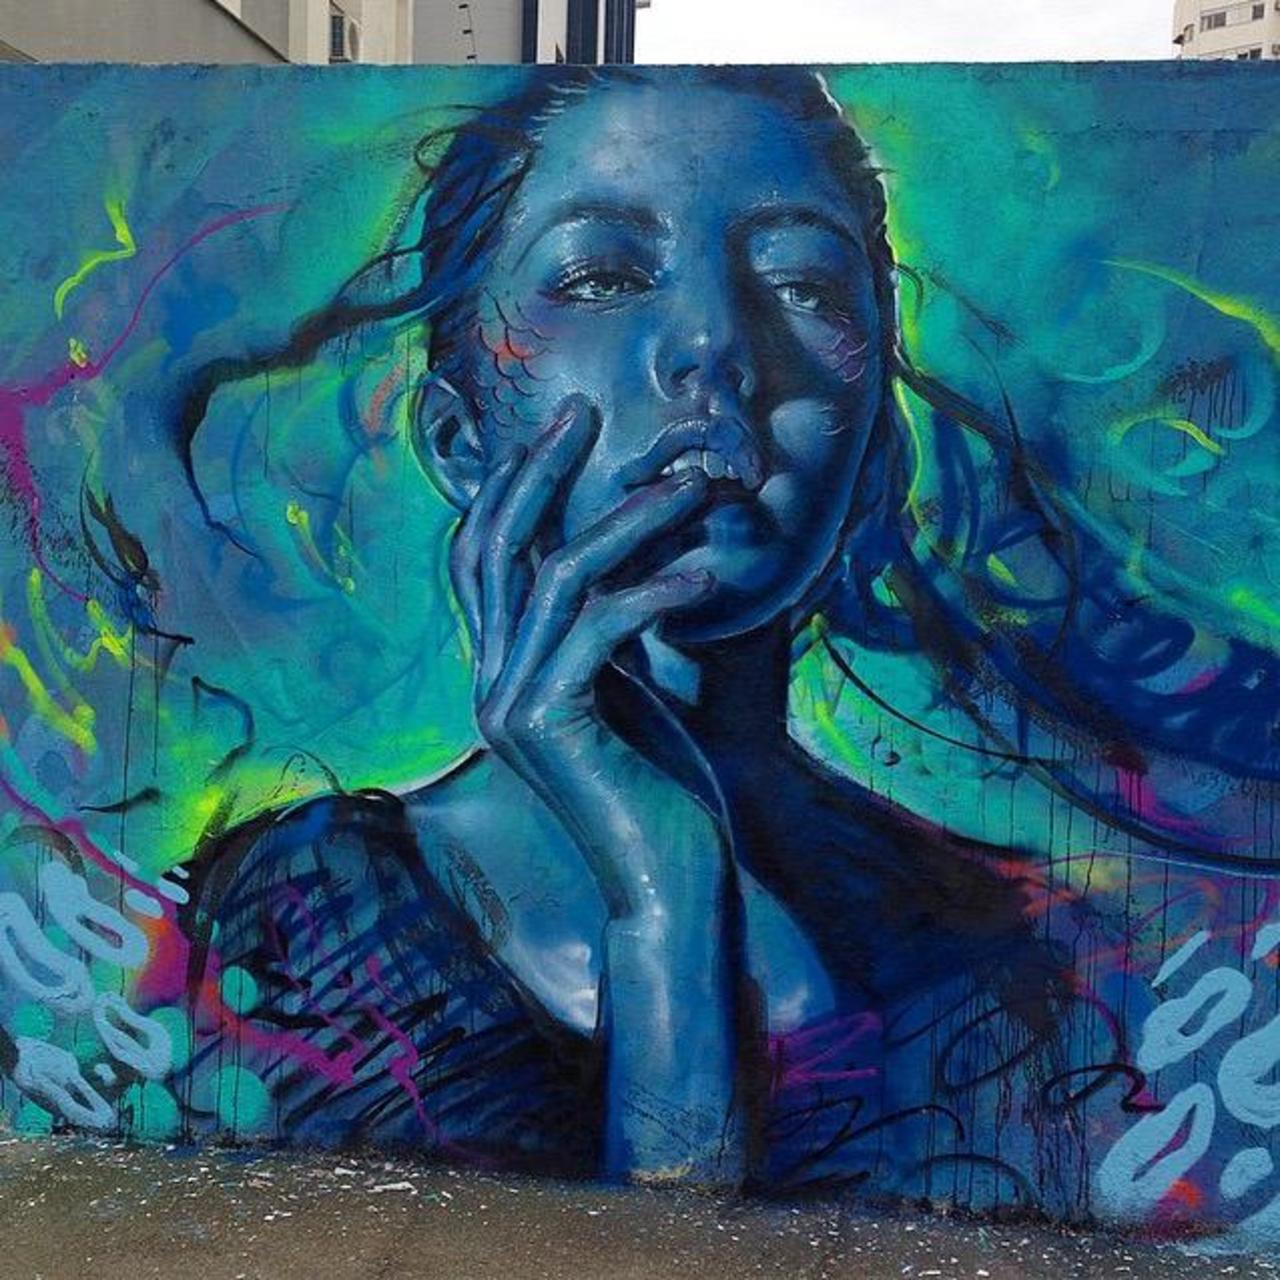 Thiago Valdi new Street Art piece titled 'Day Dreamer'

#art #mural #graffiti #streetart http://t.co/3UodbQm48I … http://twitter.com/GoogleStreetArt/status/652604458048876544/photo/1/large?utm_source=fb&utm_medium=fb&utm_campaign=charlesjackso14&utm_content=652610501642469376